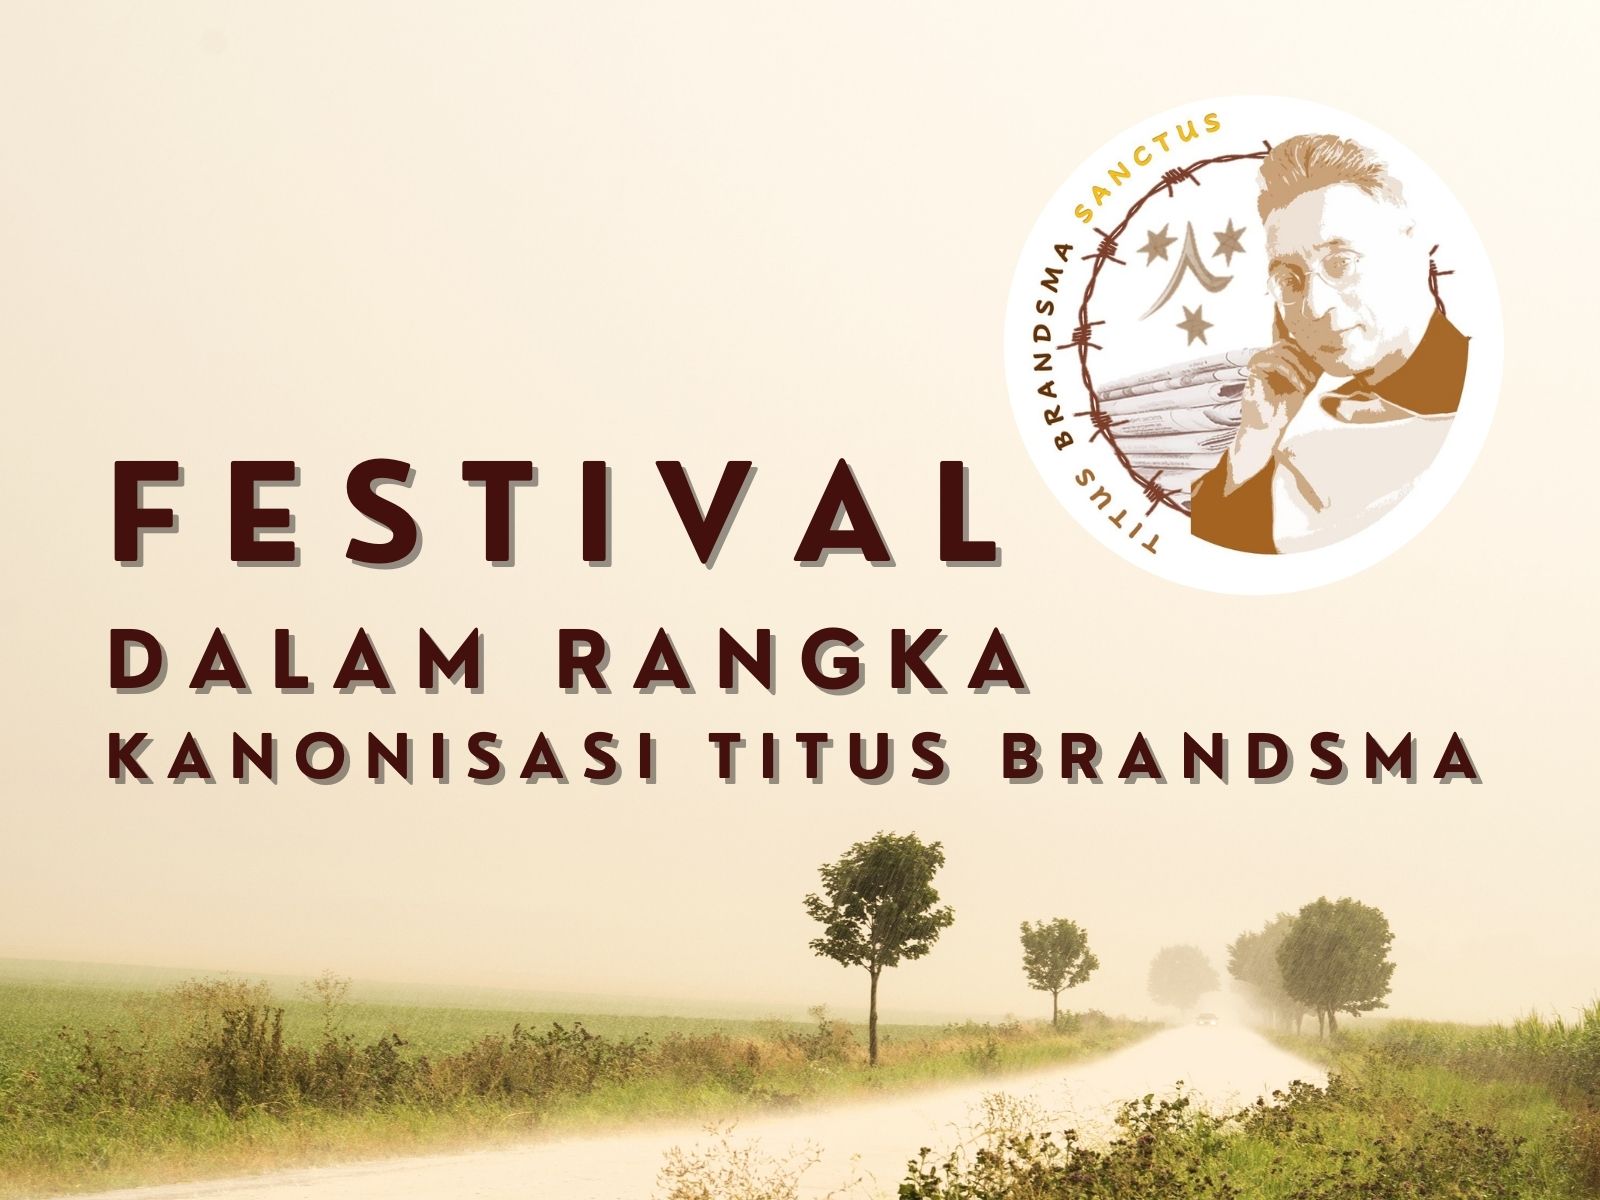 Festival Titus Brandsma dalam Rangka Kanonisasi Titus Brandsma